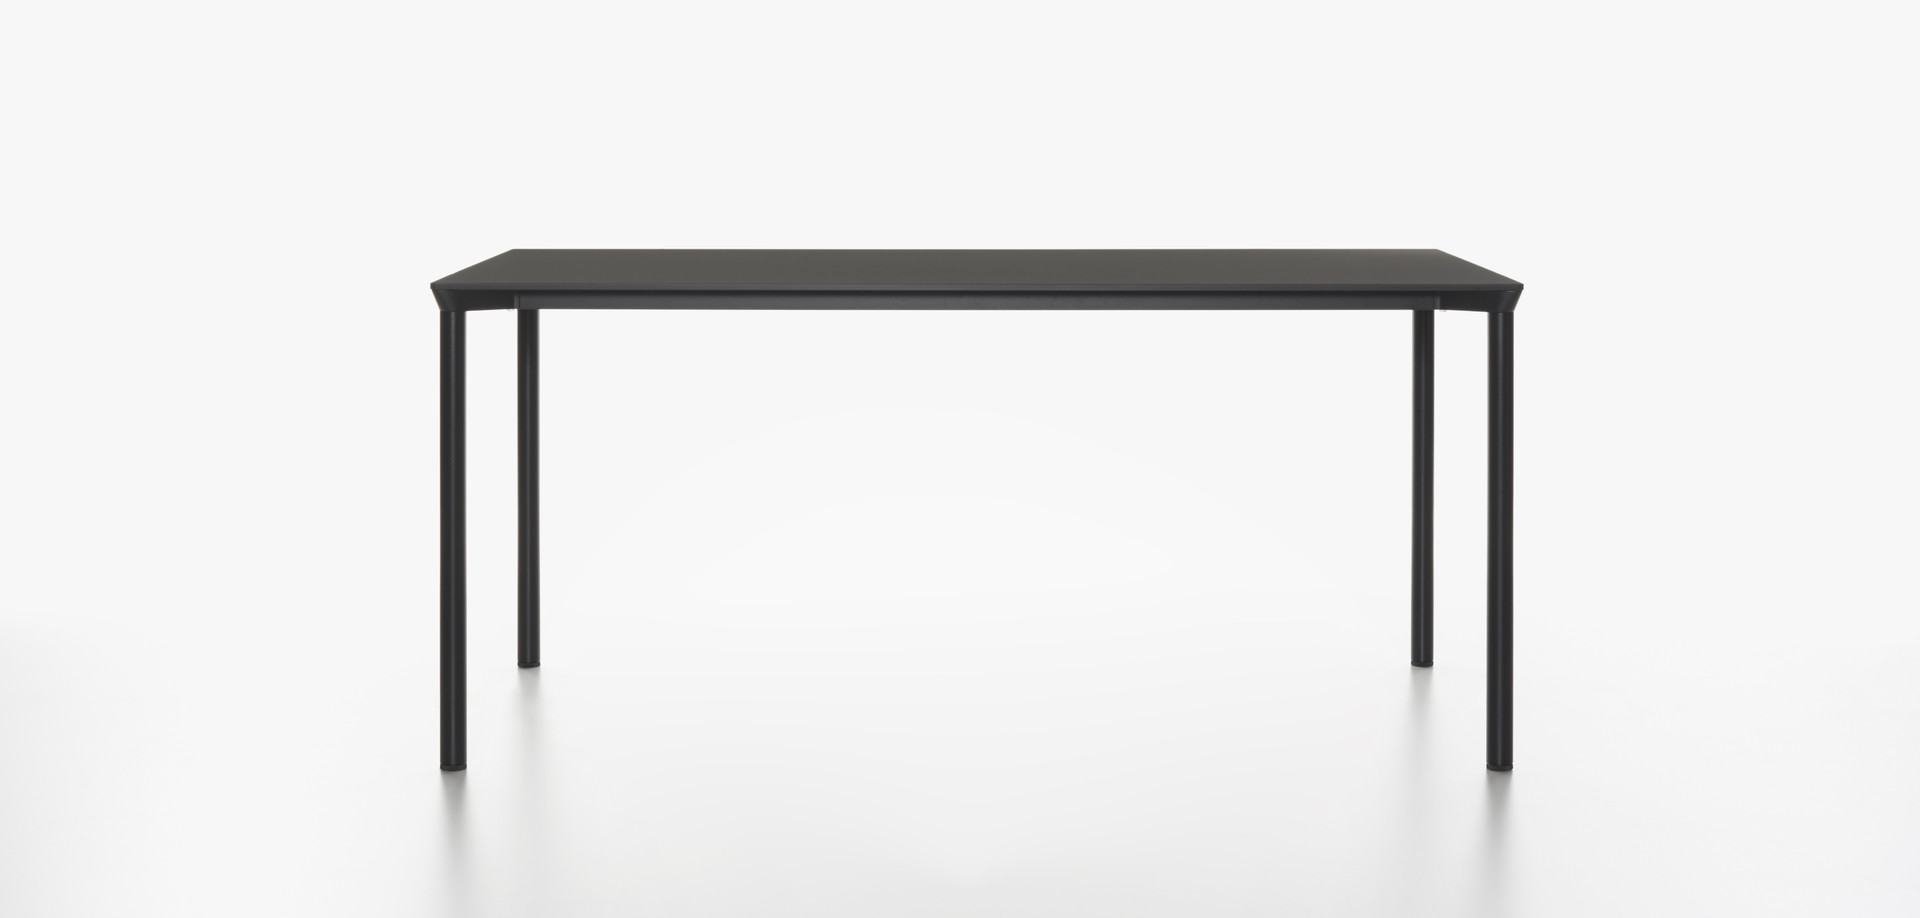 Plank - MONZA table rectangular, black HPL table top, black aluminum legs